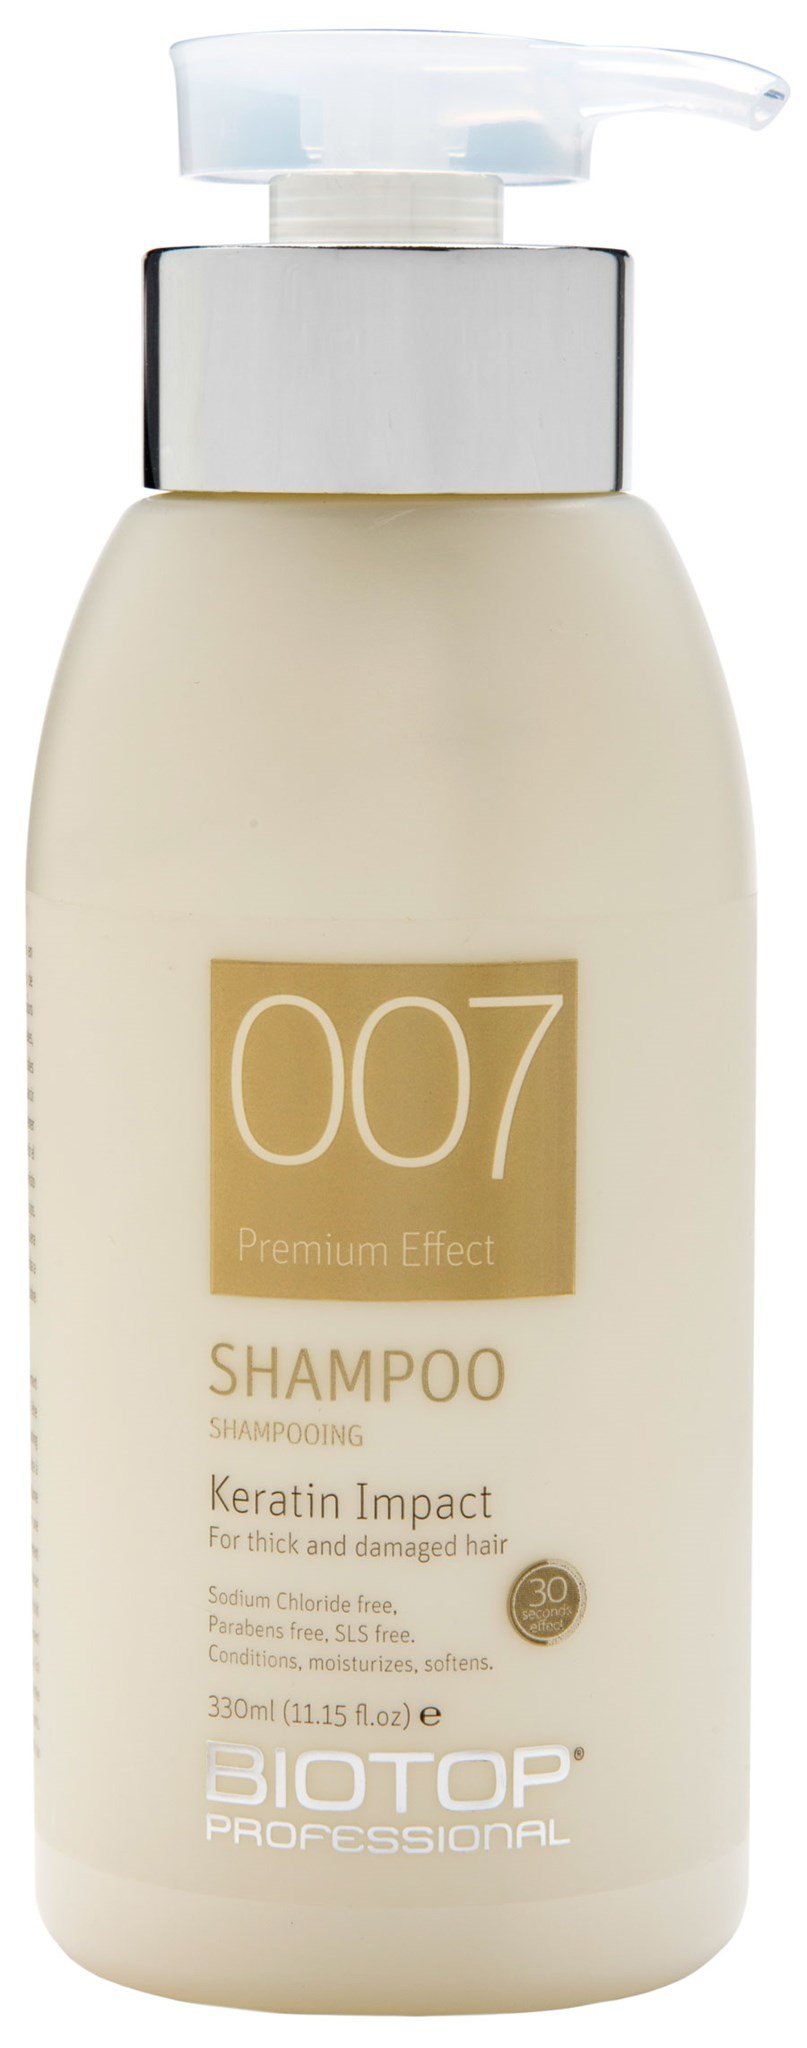 Biotop - 007 Keratin Impact Shampoo 330ml